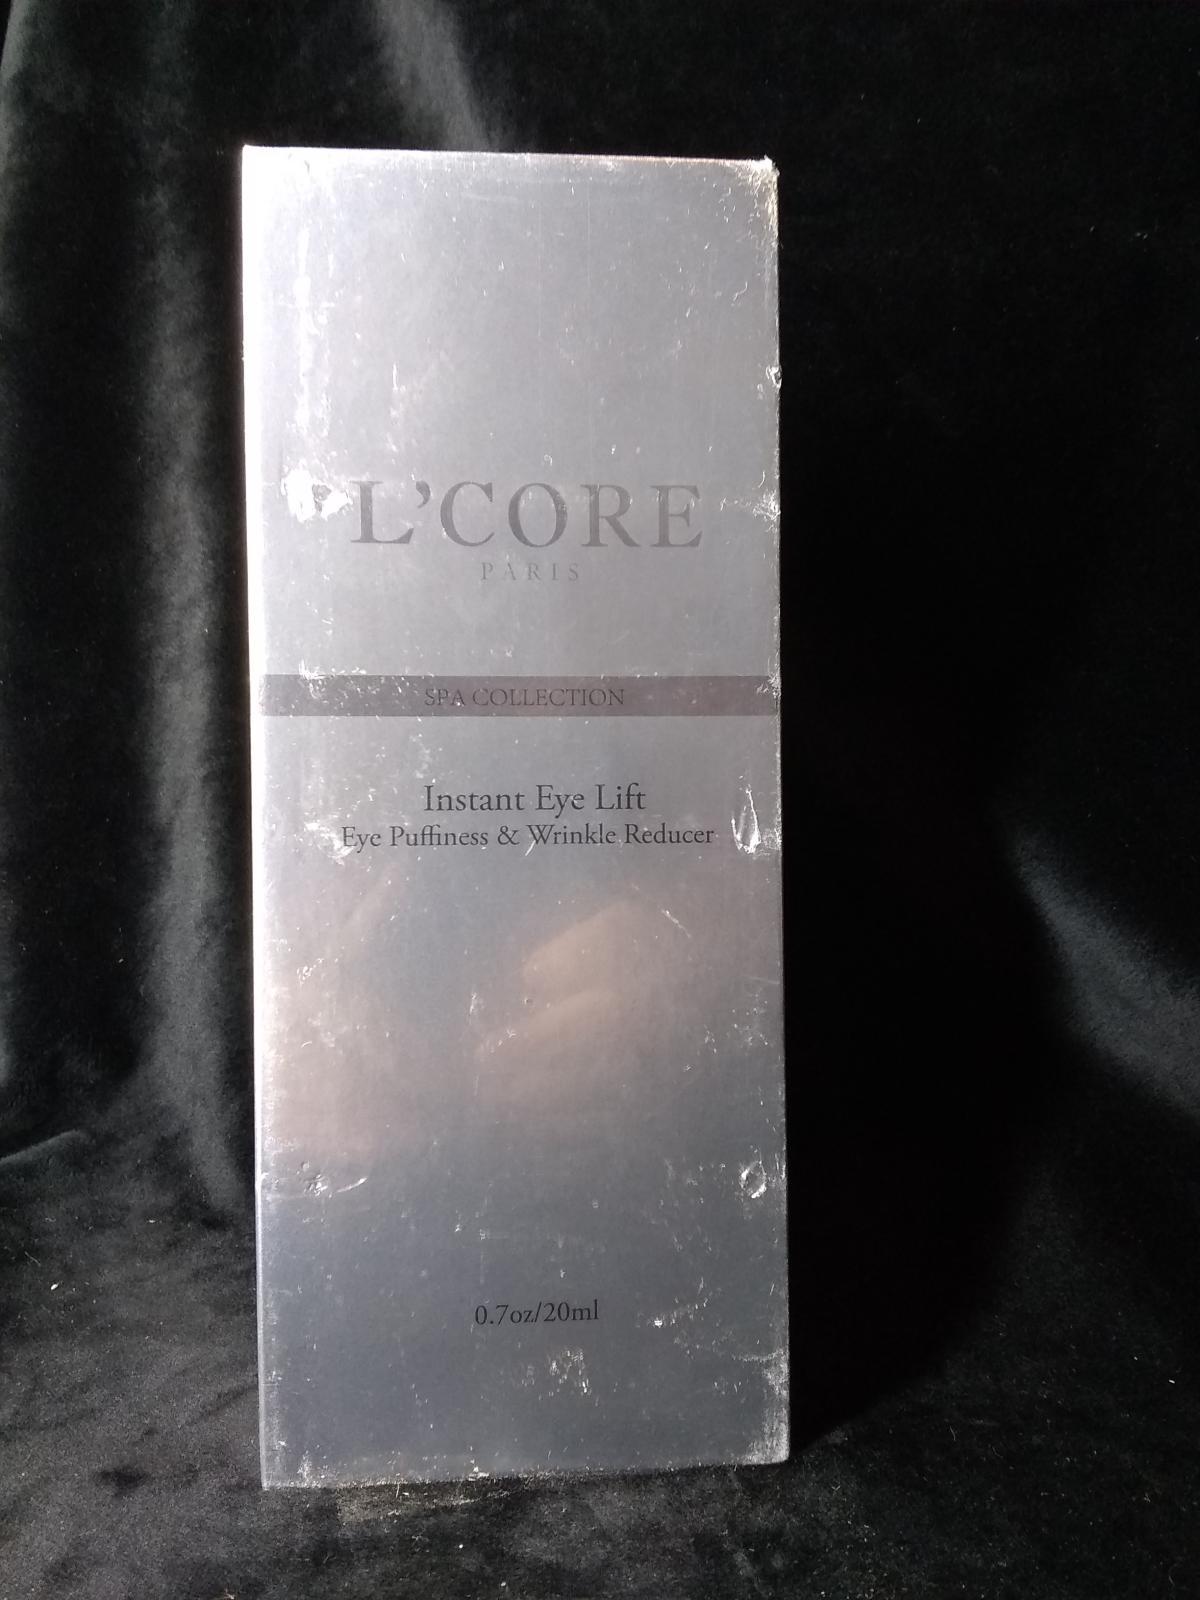 L'Core Paris Skin Care - Spa Collection - Instant Eye Lift ($399.00 Retail)